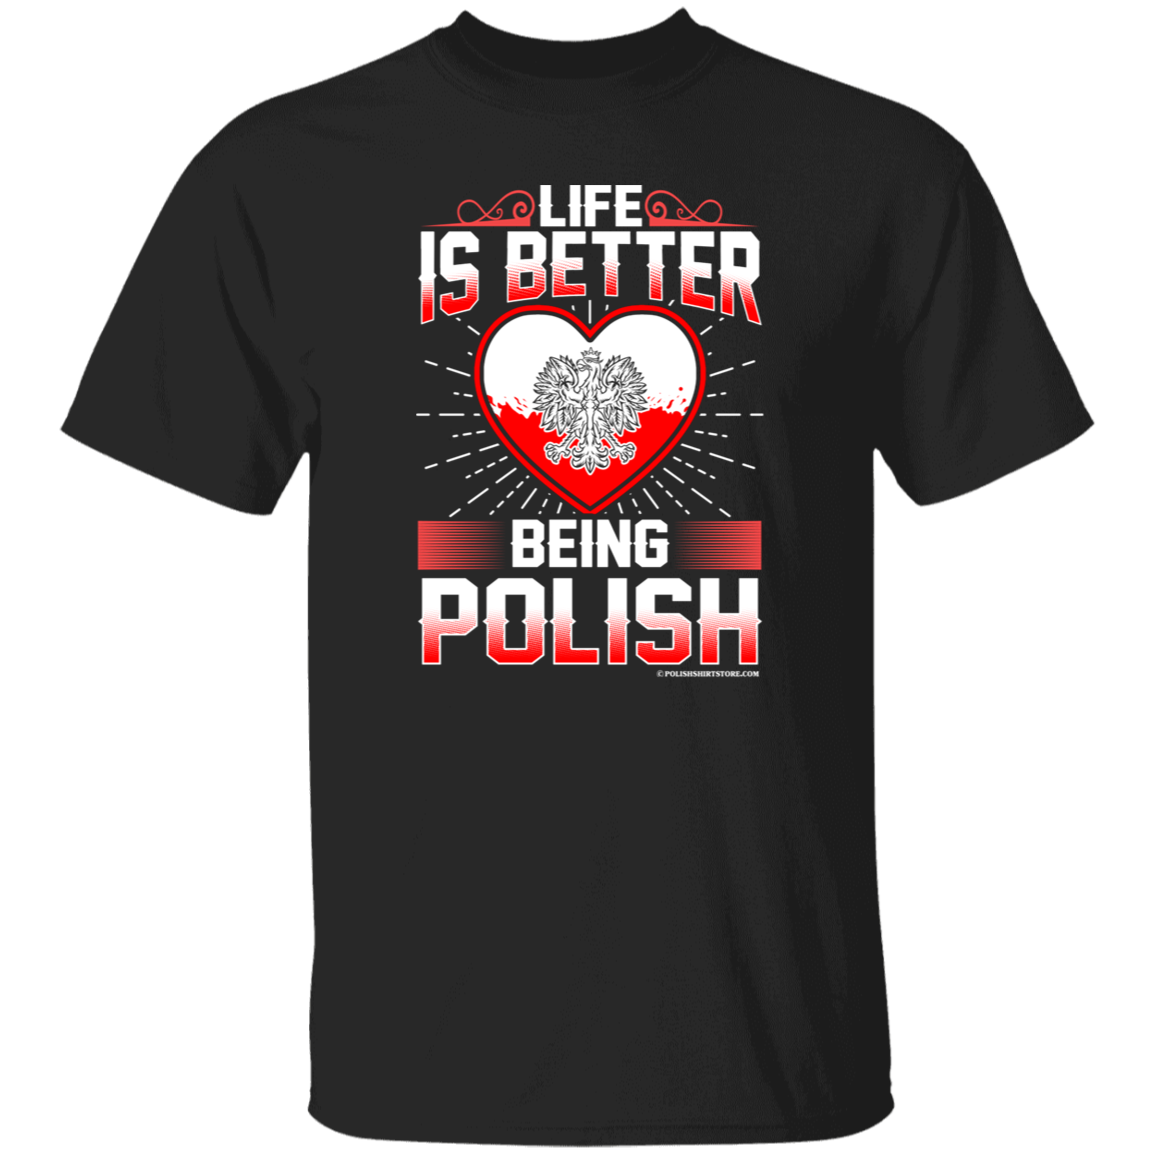 Life Is Better Being Polish Apparel CustomCat G500 5.3 oz. T-Shirt Black S